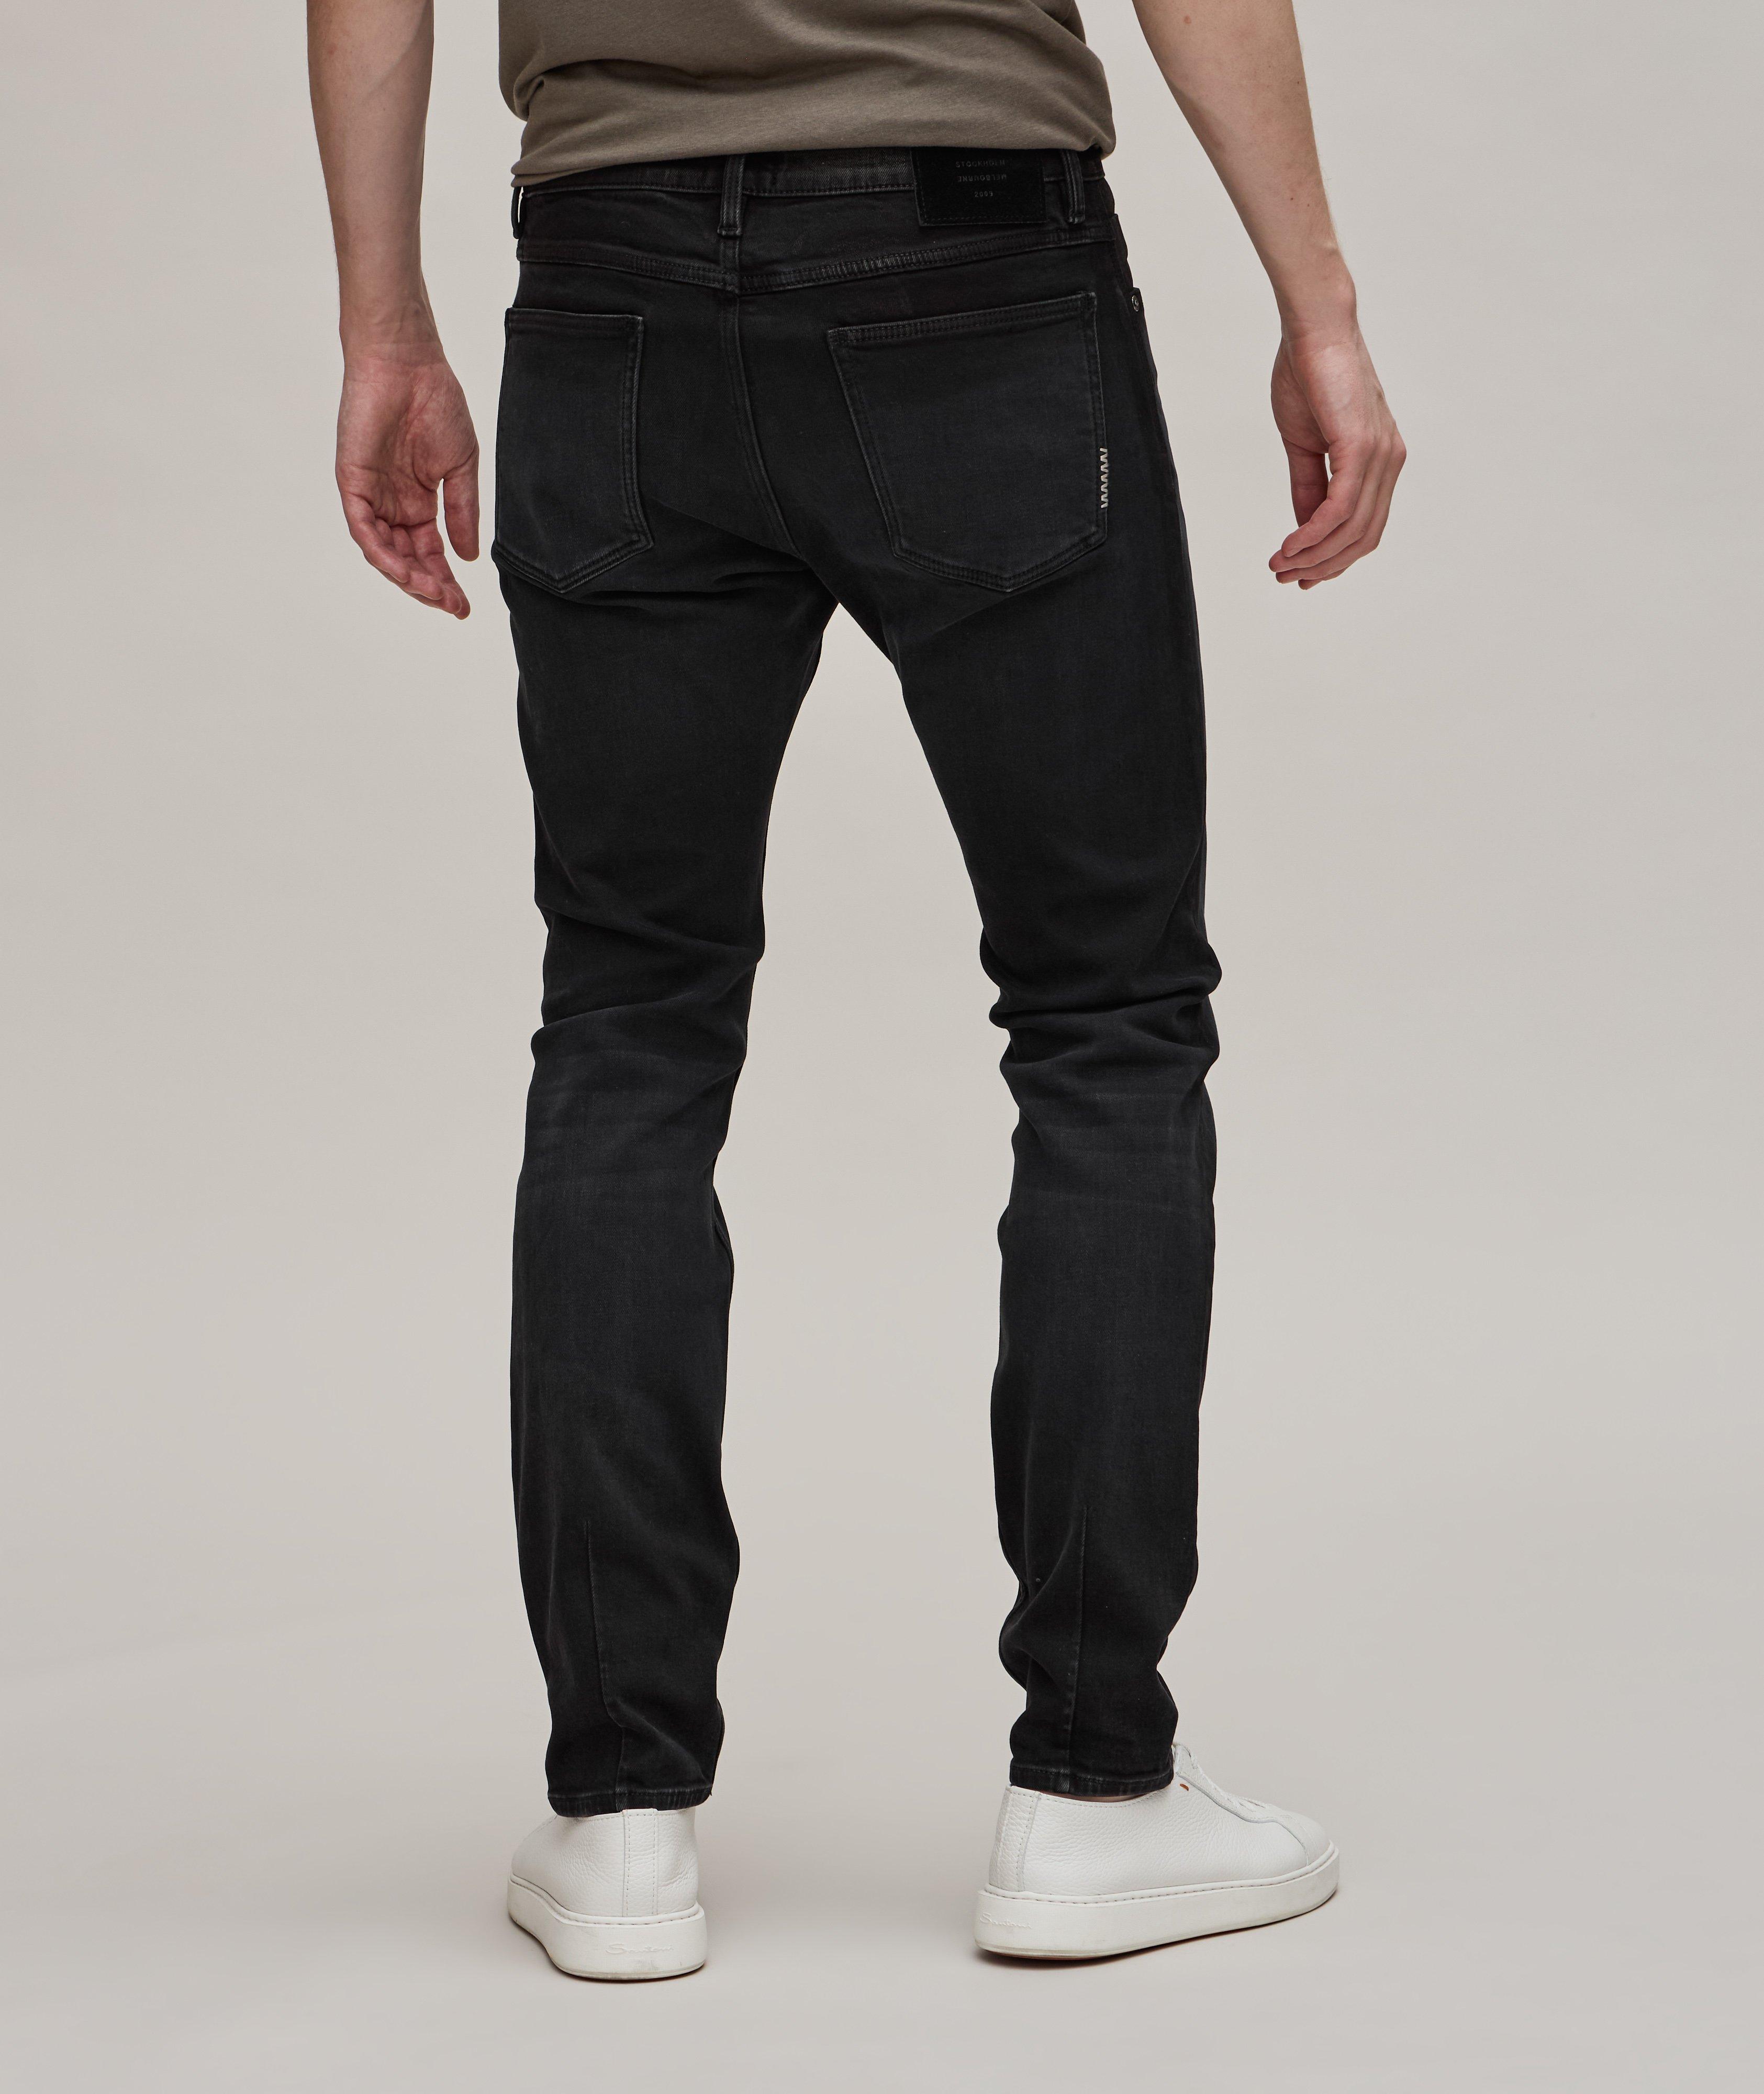 Iggy Skinny Distressed Stretch-Cotton Jeans image 3